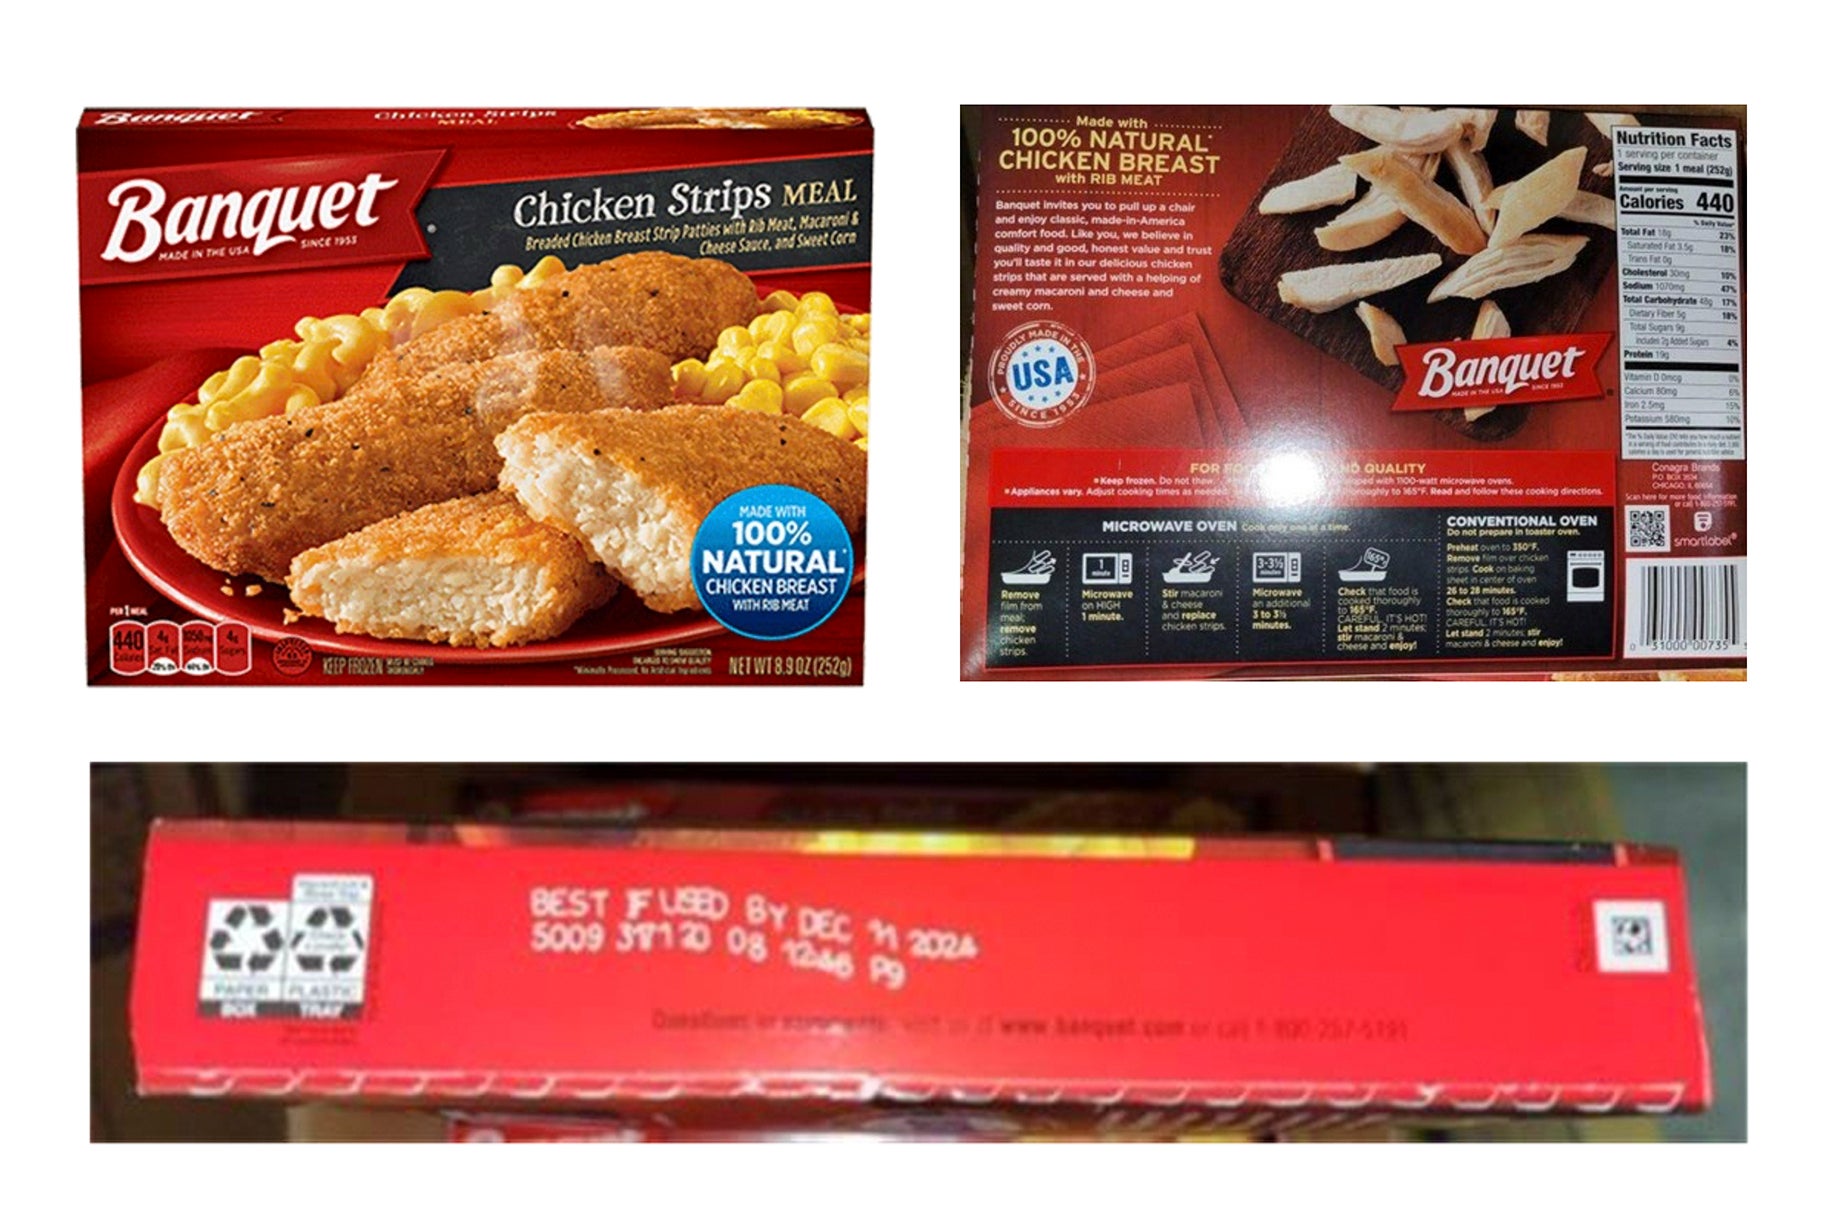 Red packaging for Banquet Brand Frozen Chicken Strips.